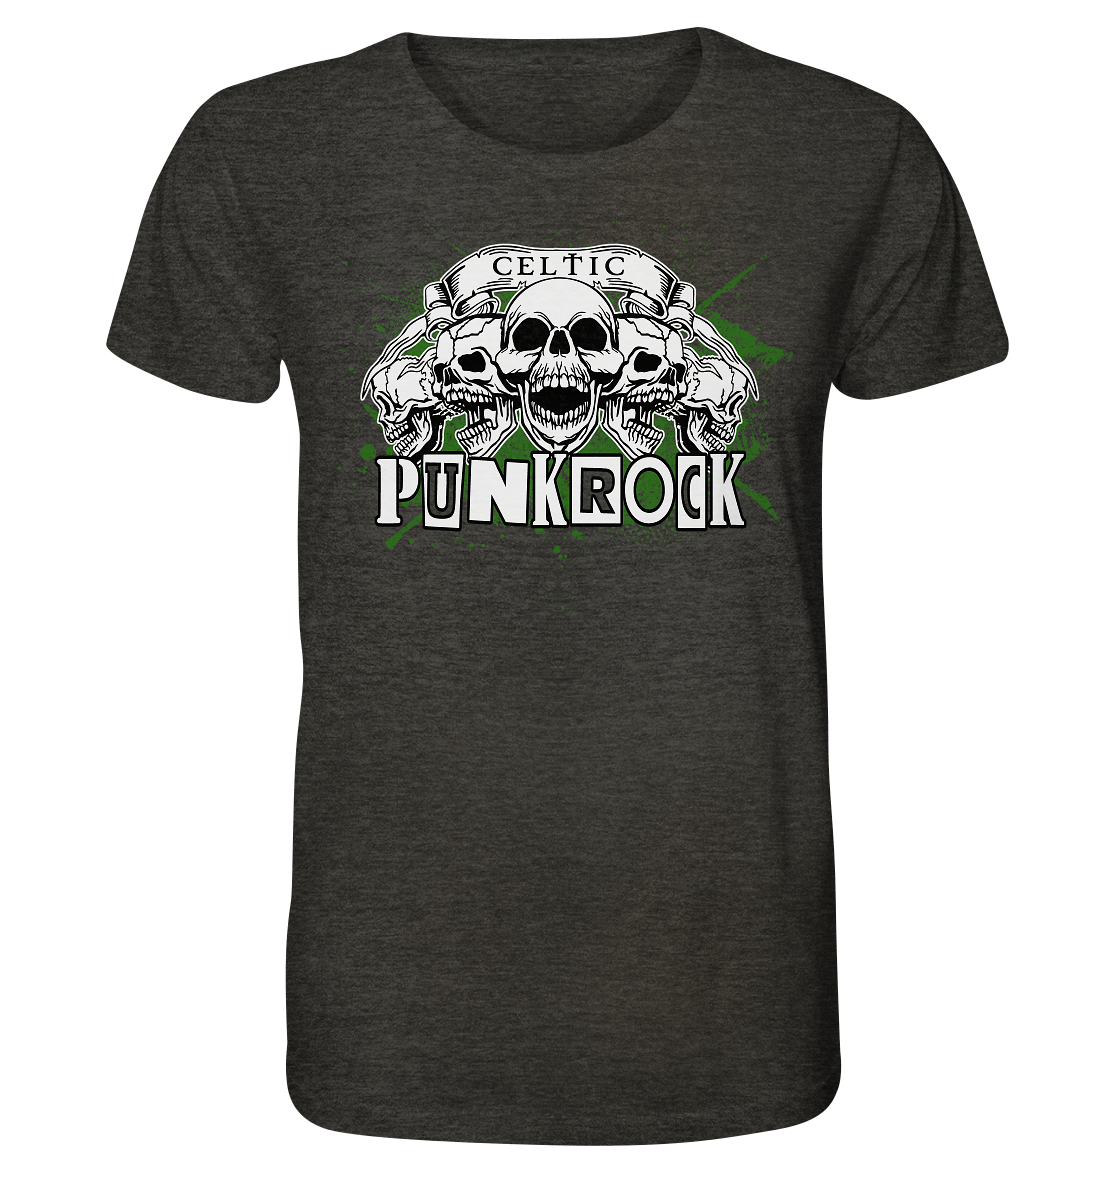 Celtic "Punkrock" - Organic Shirt (meliert)